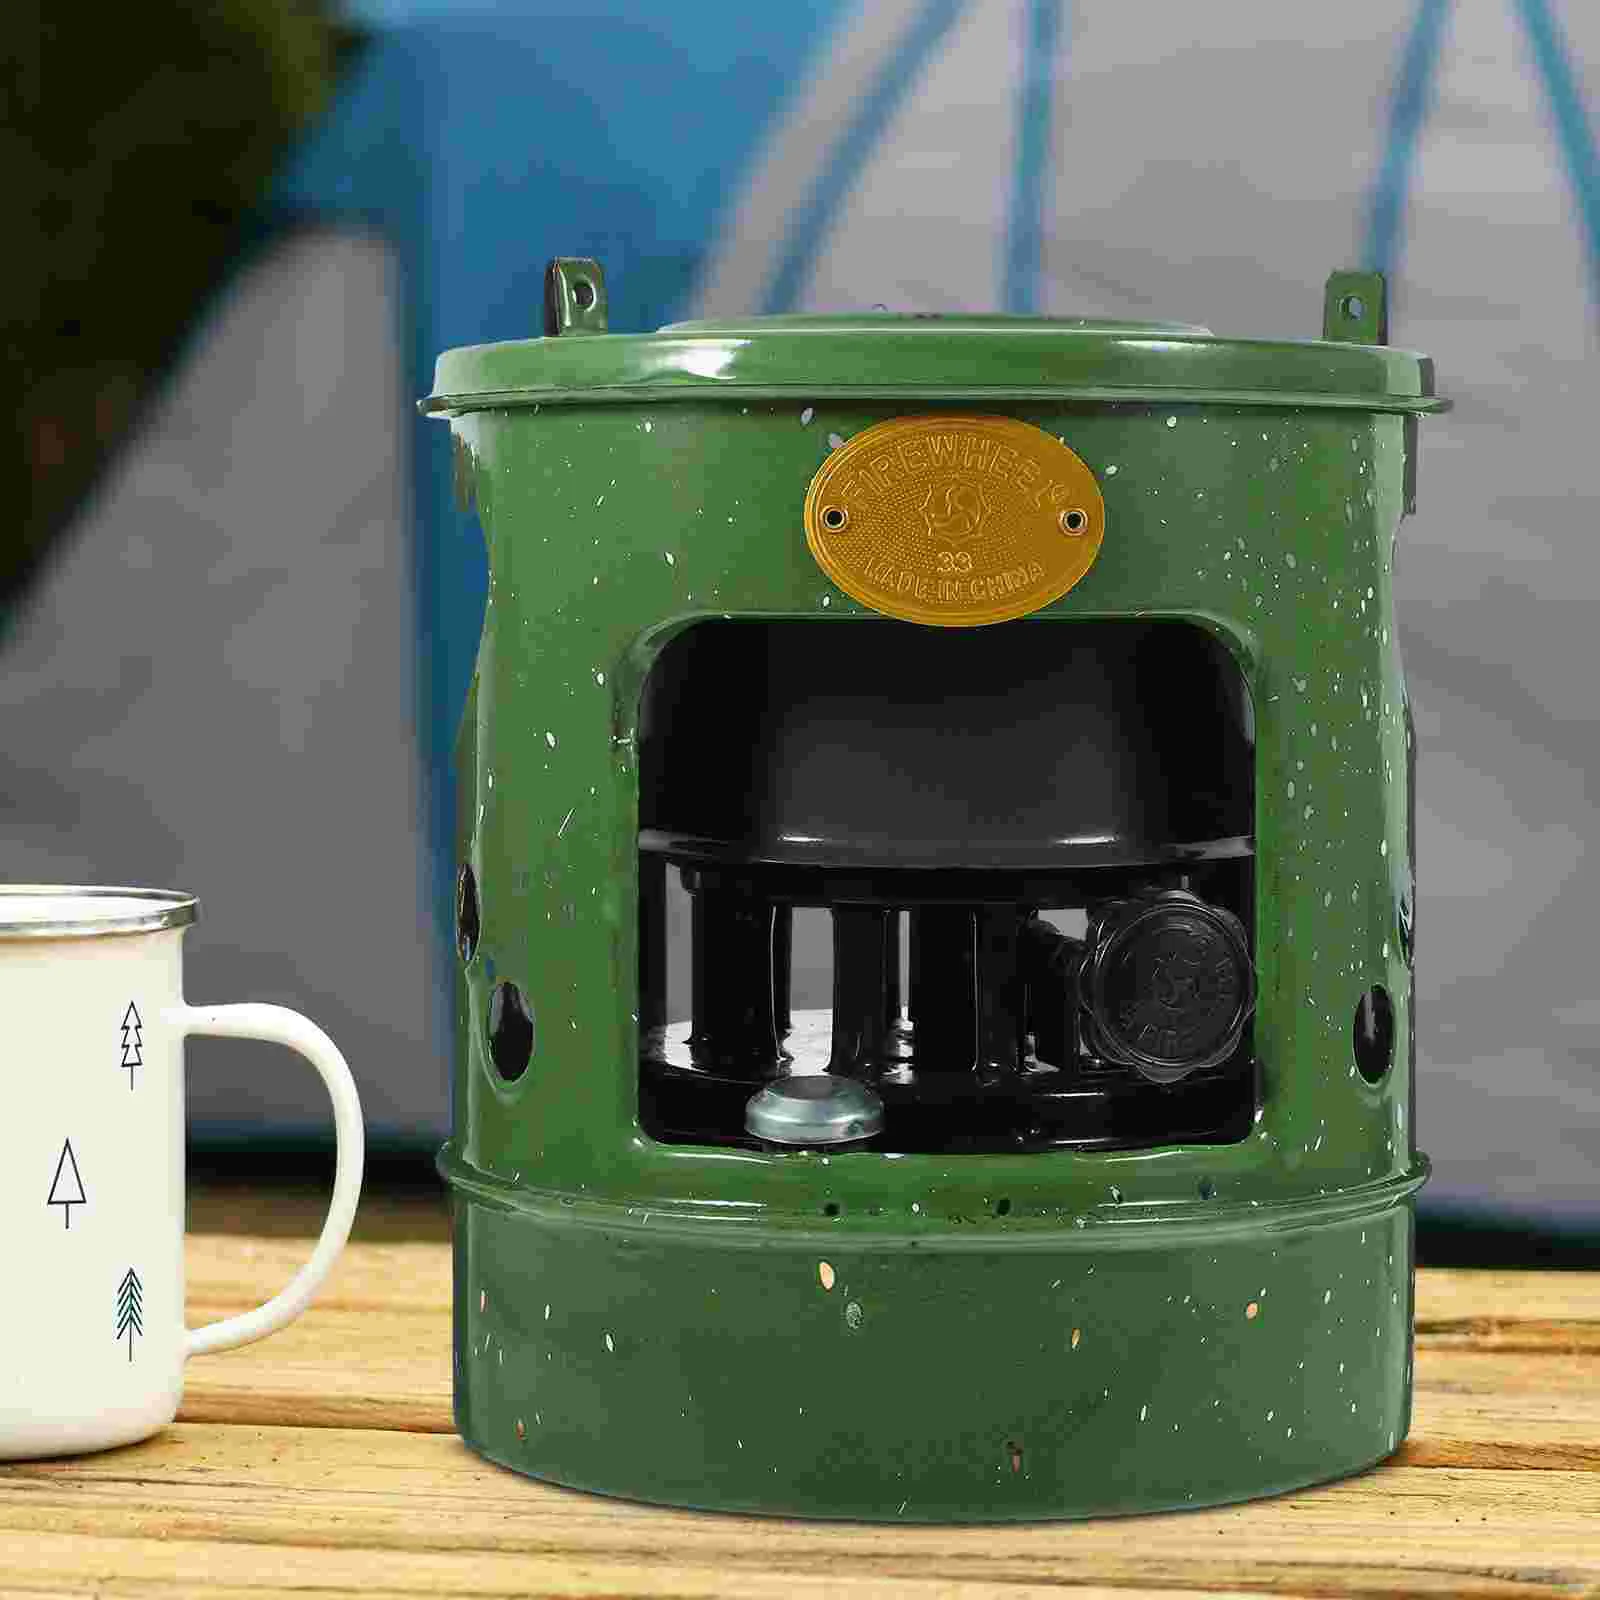 

Home Stove Portable Outdoor Grill Rack Kerosene Burner Pot Paraffin Burning Tool Camping